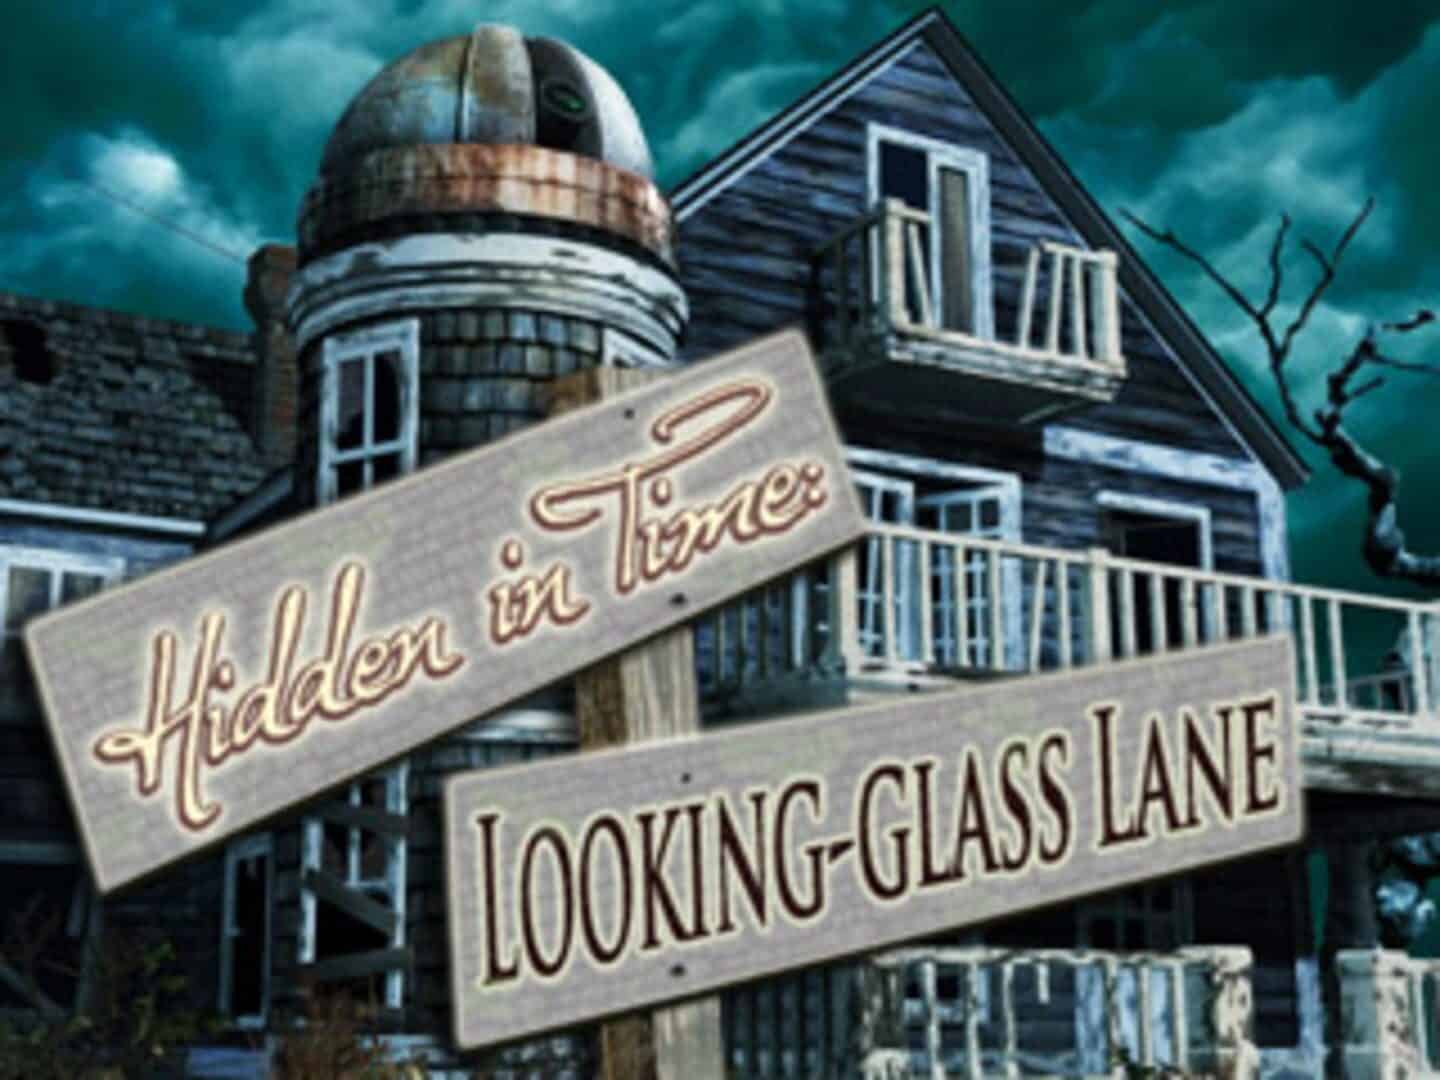 Hidden in Time: Looking-glass Lane